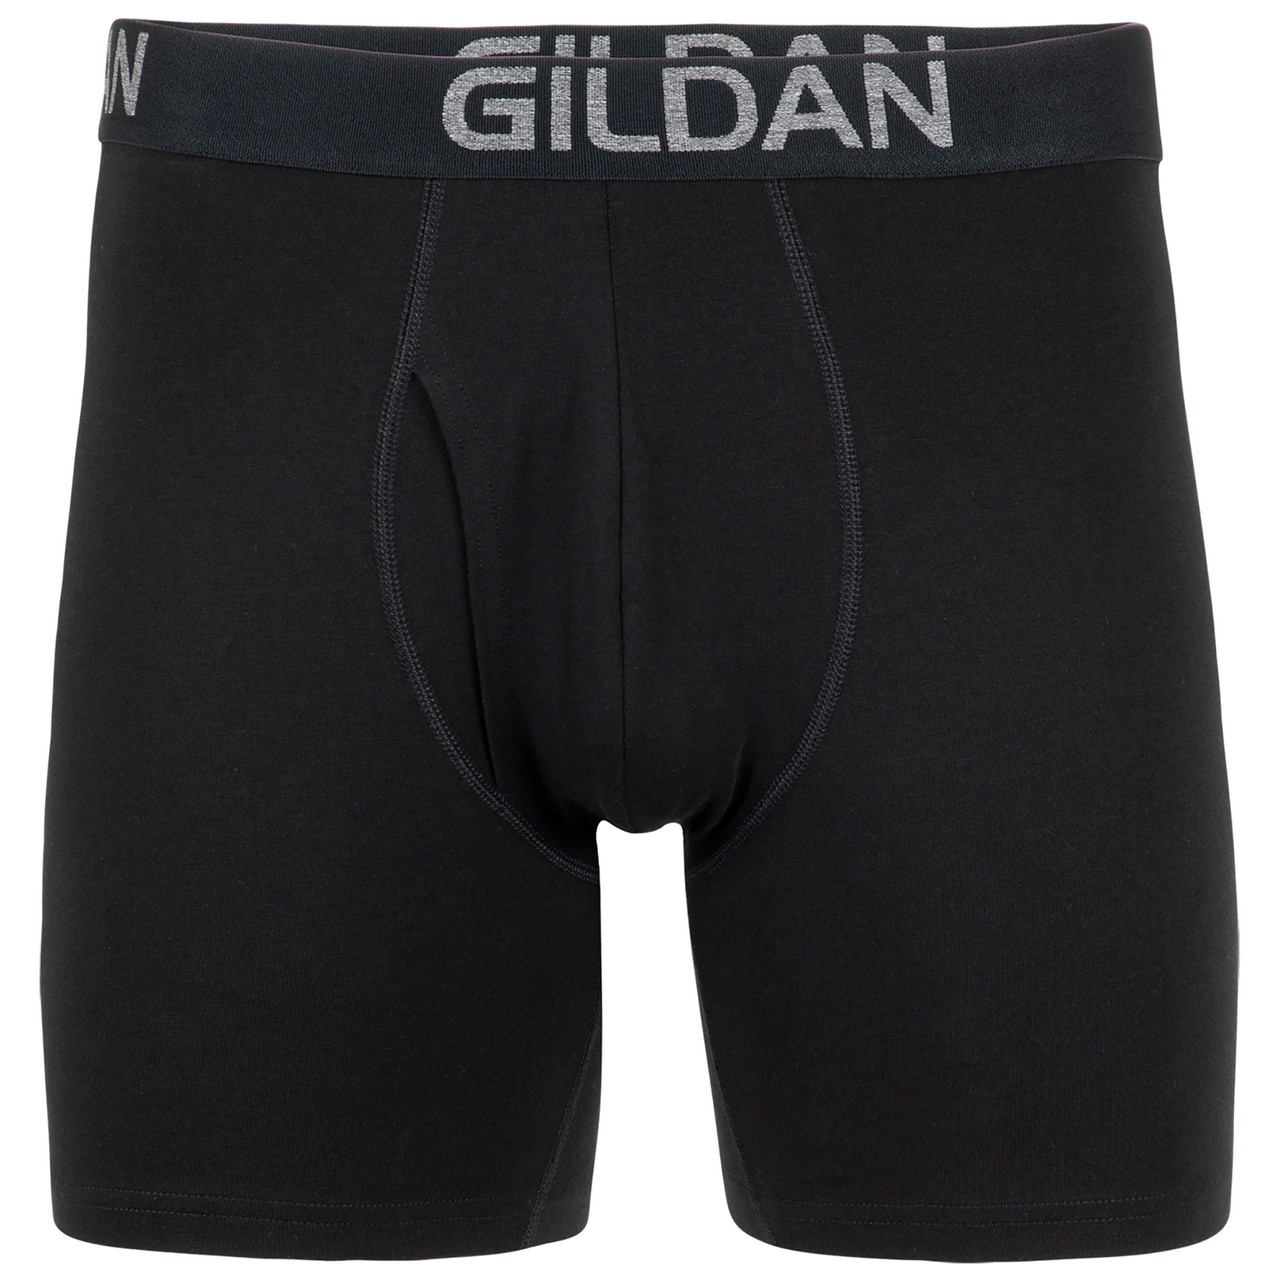 Gildan Platinum Men's Briefs, Black/Sport Grey/Charcoal (6-Pack